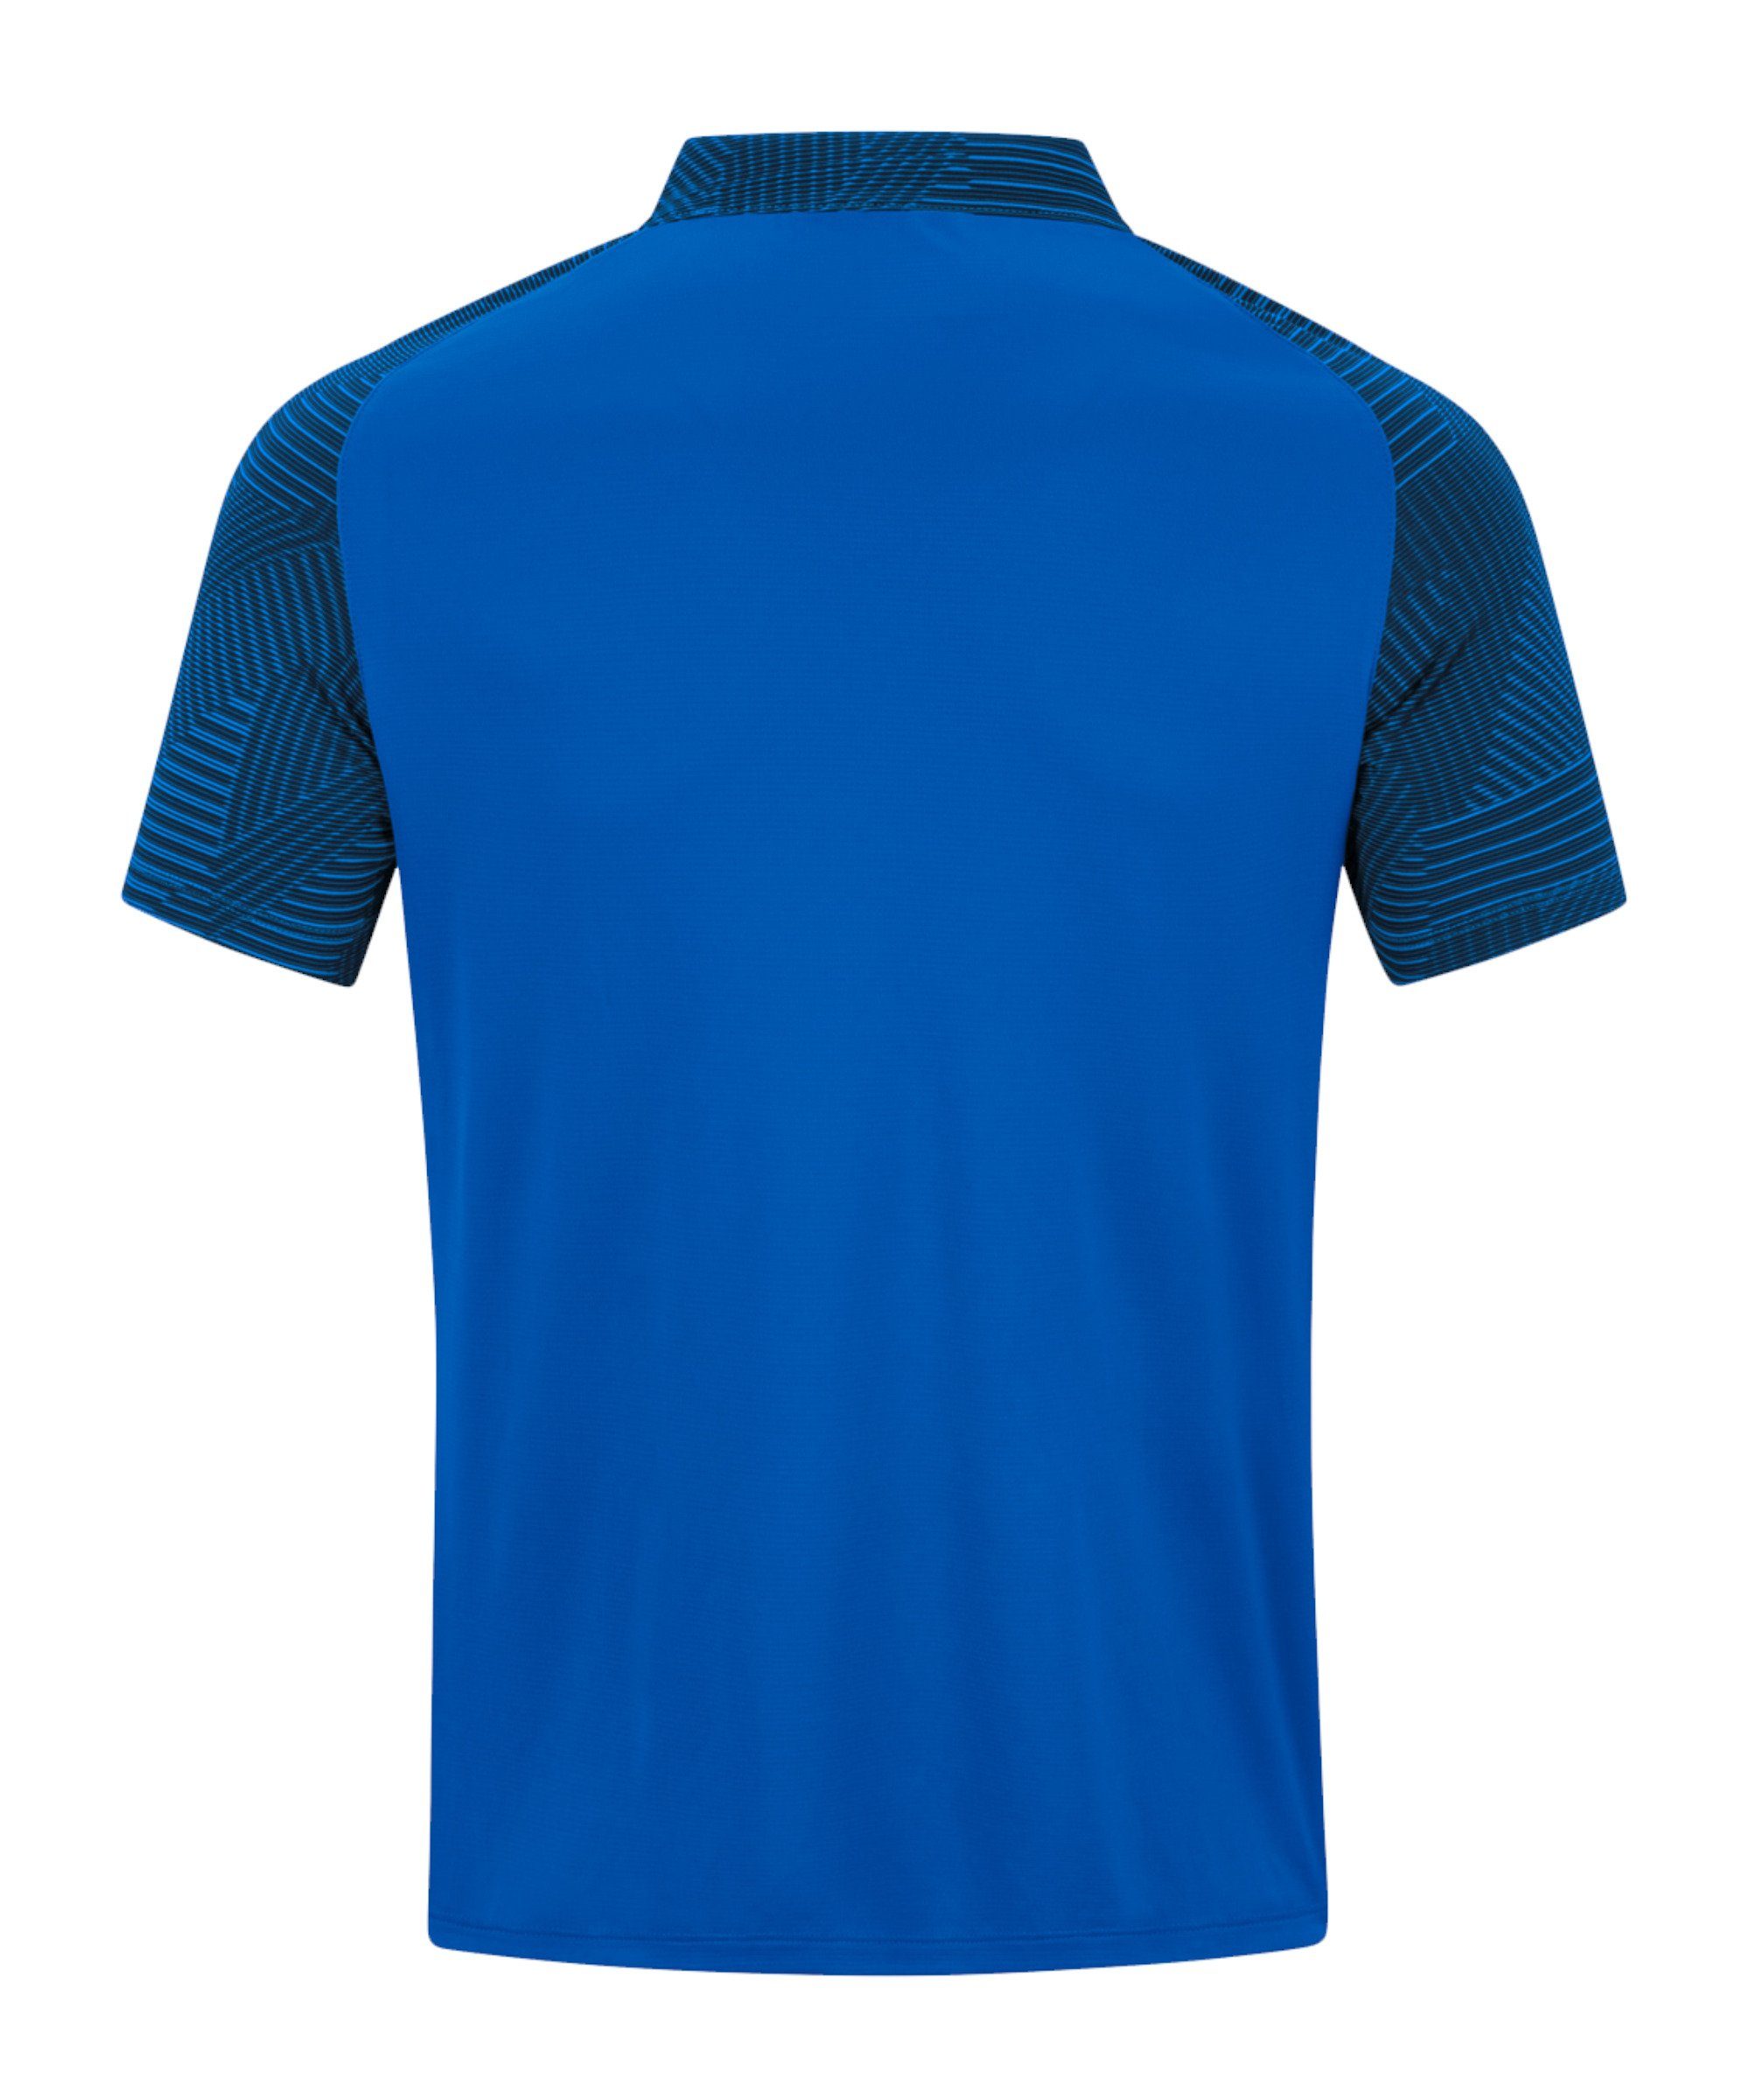 Jako Performance blaublau default T-Shirt Poloshirt